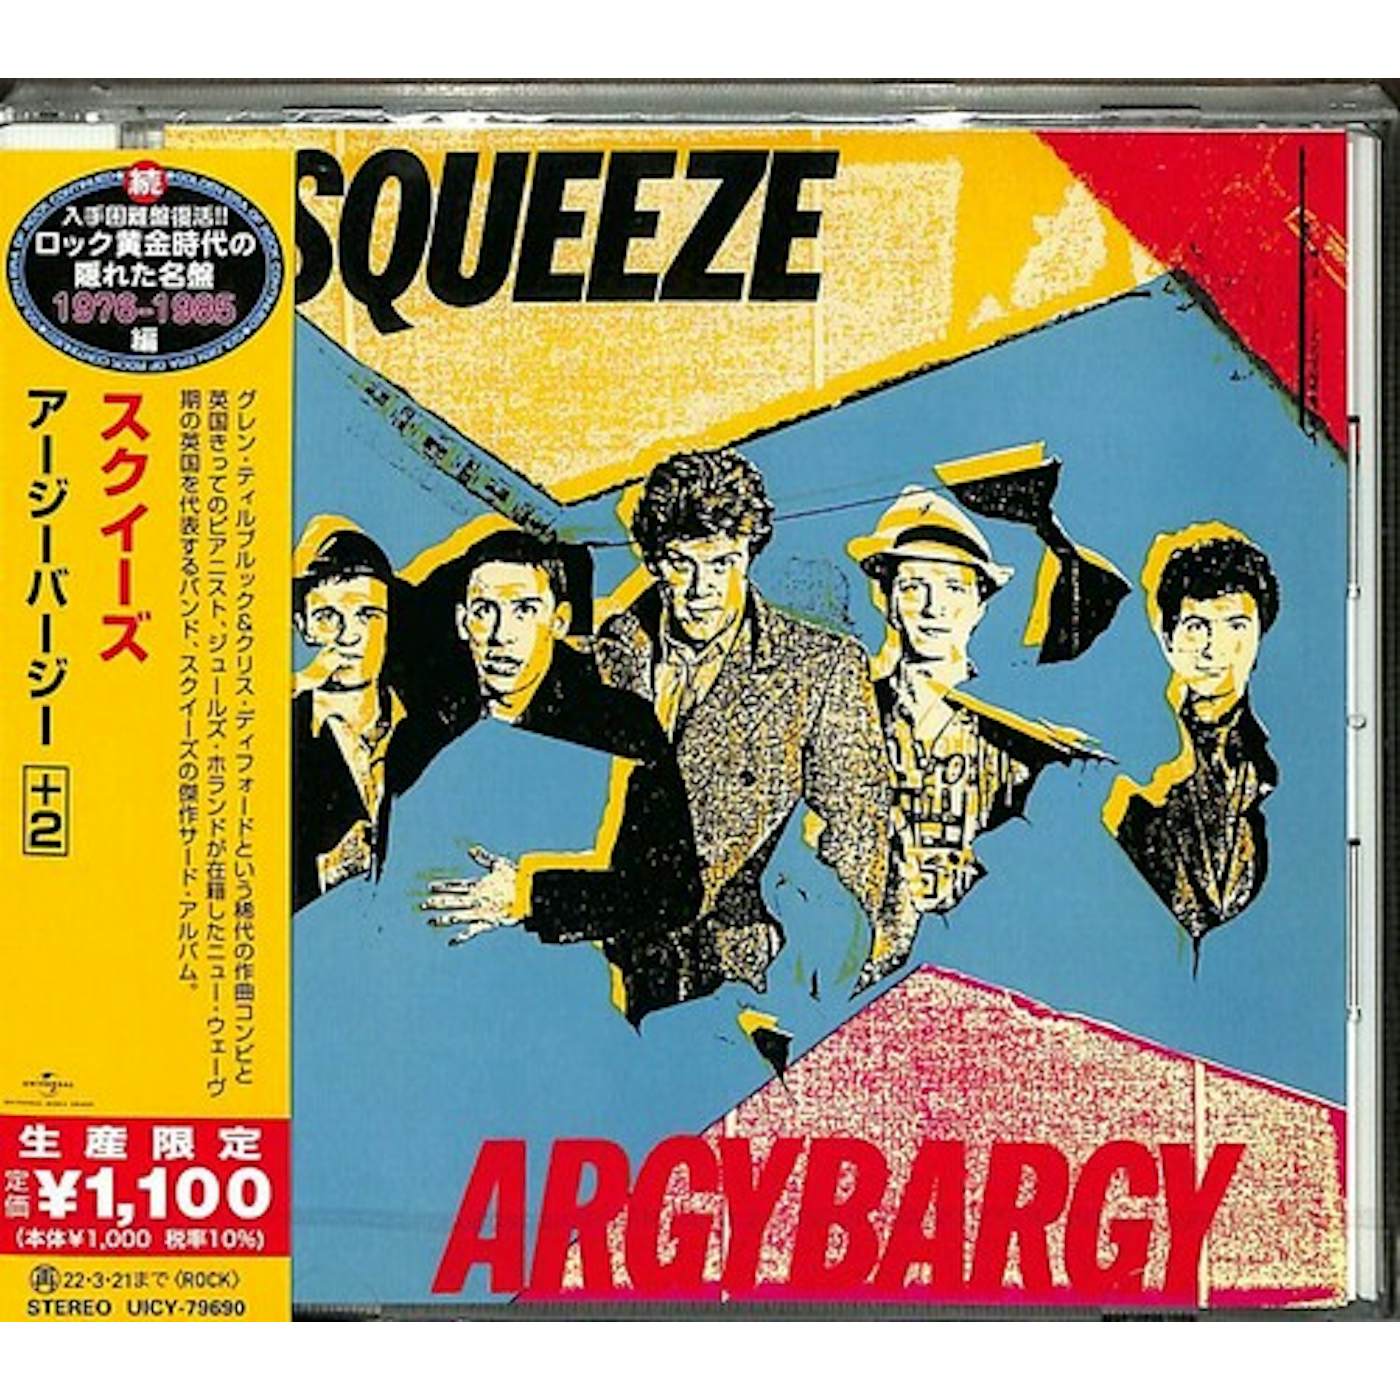 Squeeze ARGY BARGY CD